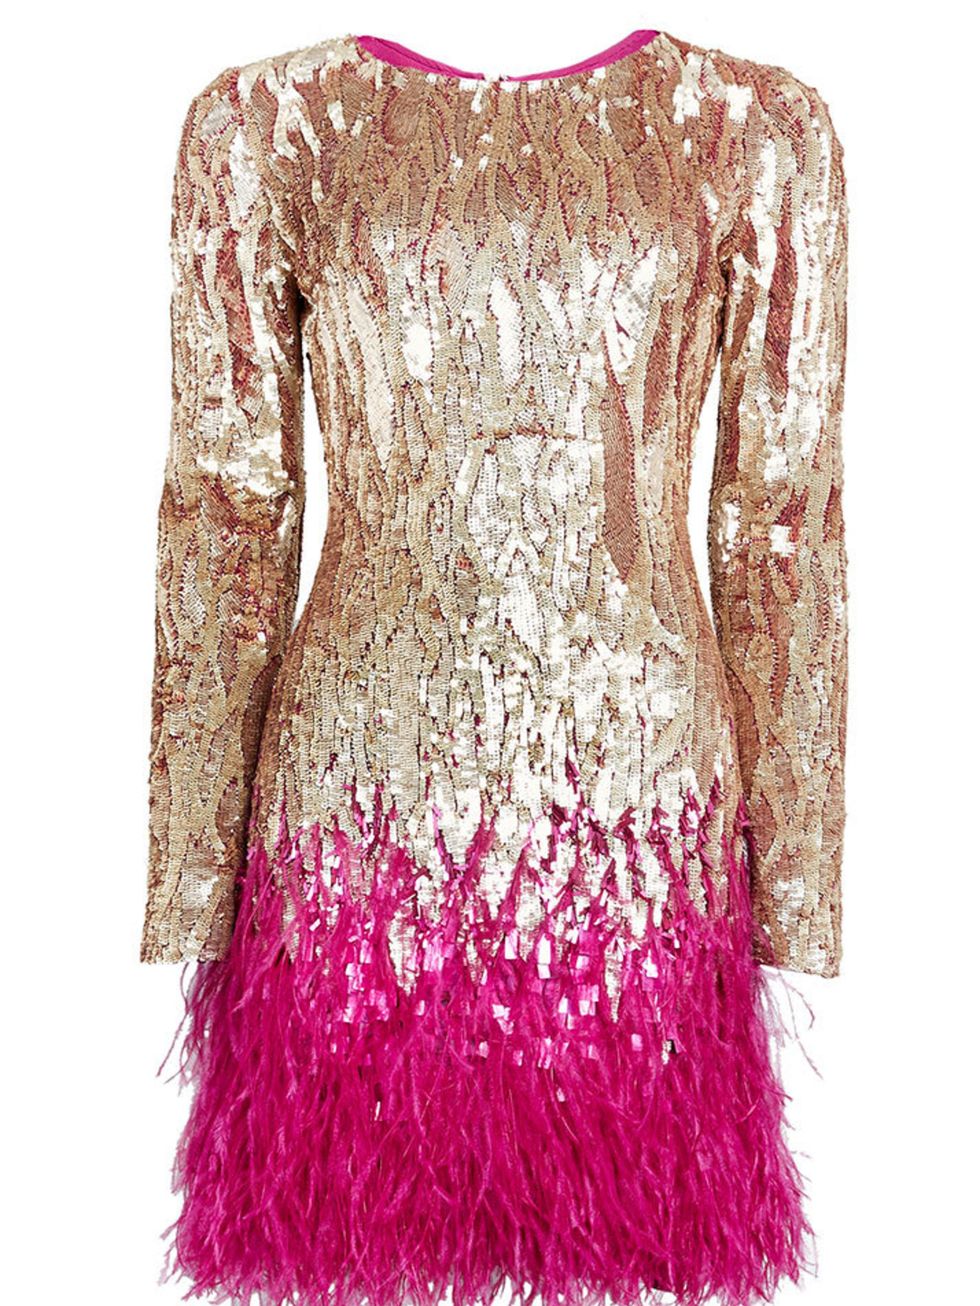 <p>Gold Liquid Sequin Feather Trimmed Mini Dress,</p>

<p><a href="http://www.matthewwilliamson.com/shop/product/5393/liquid-sequin-mini-dress">Buy online</a></p>